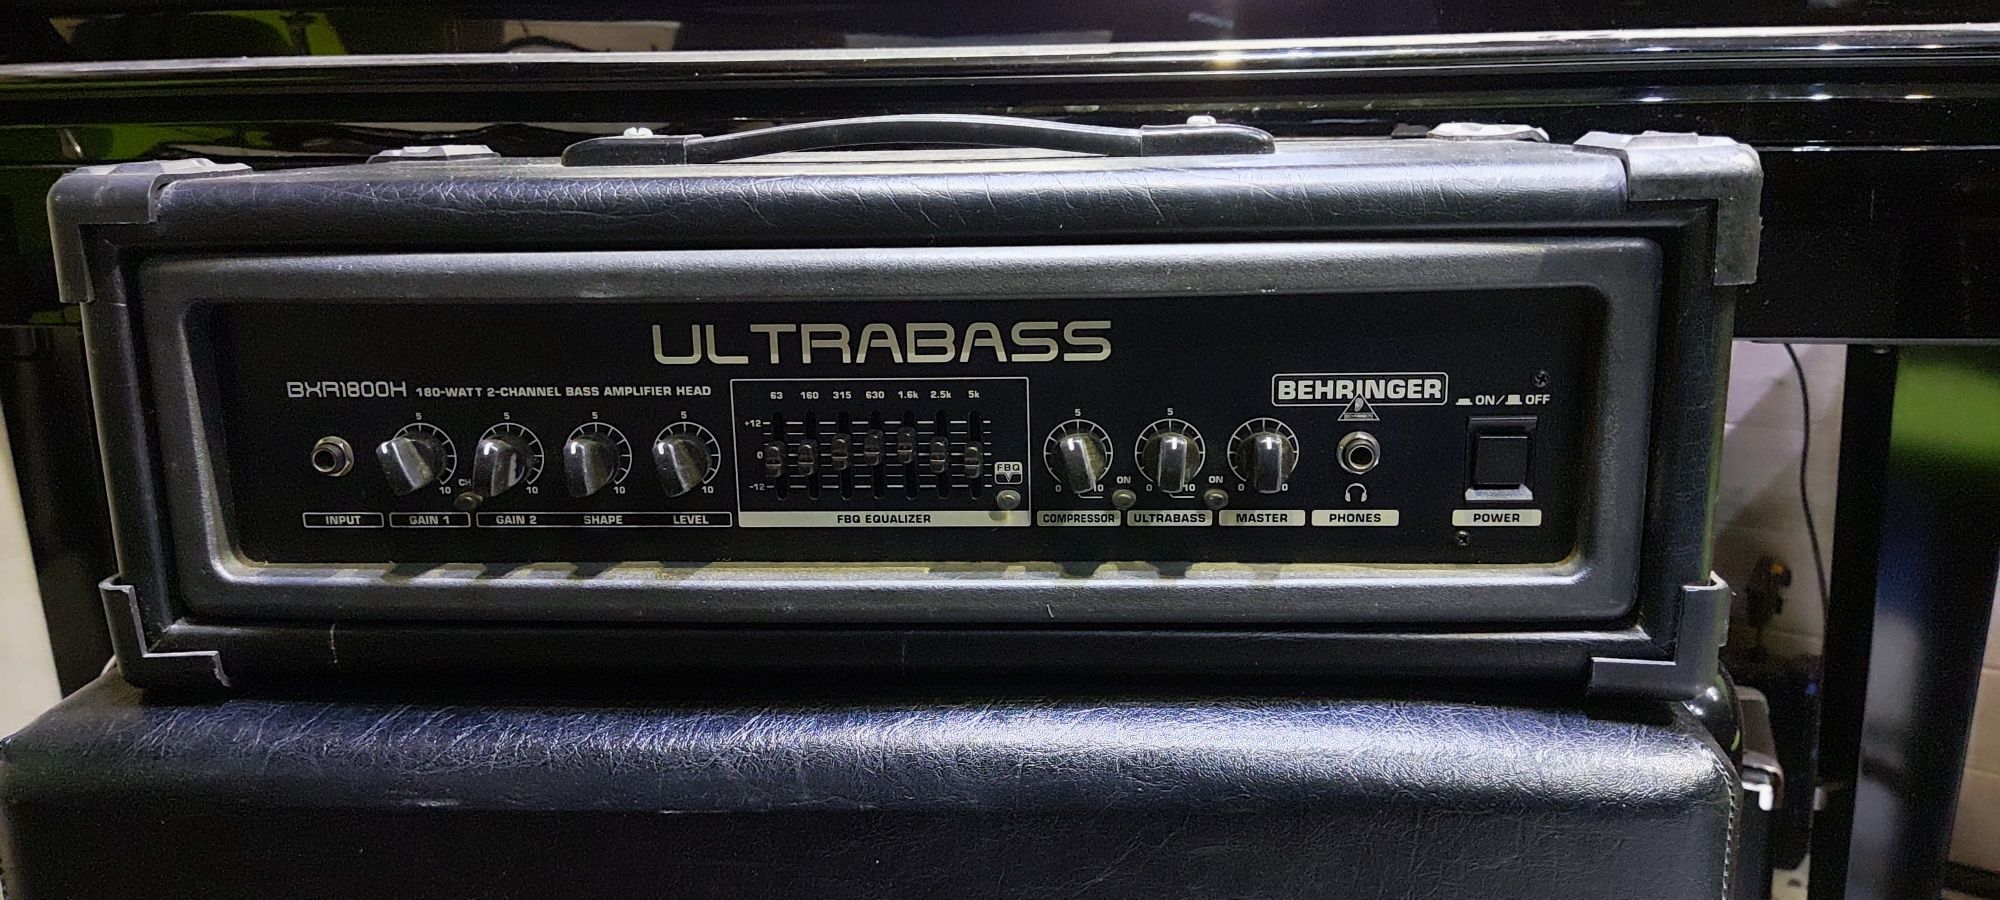 Cabeça de amplificador de baixo Behringer Ultrabass 180w